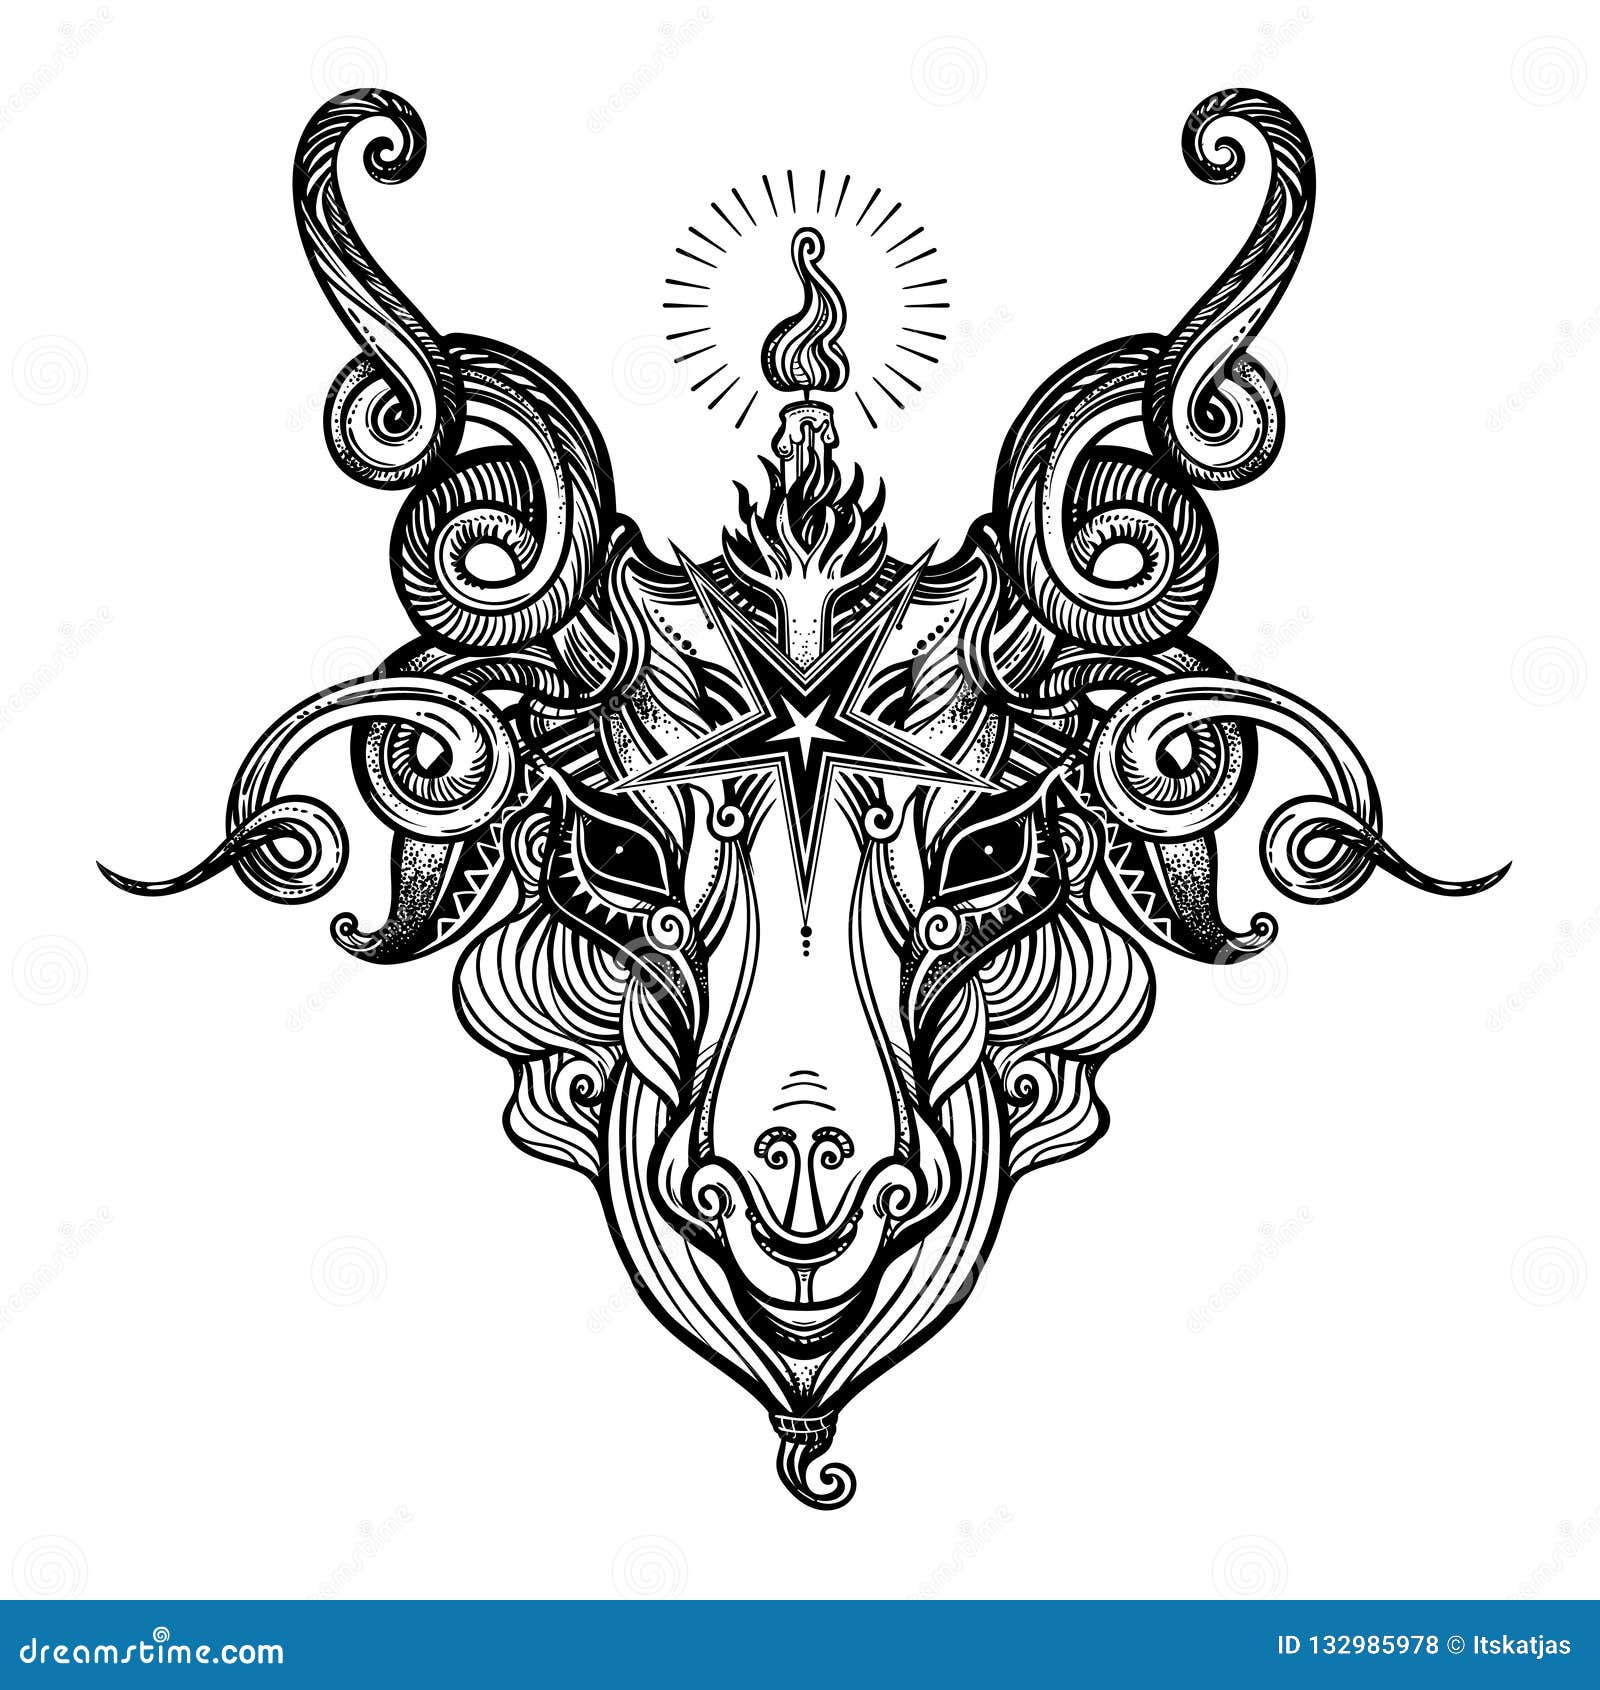 Home Decor Tapestry Wall Hanging Pentagram With Demon Baphomet Satanic Goat Head With Third Eye Binary Satanic Symbol Vector 533043418 for Bedroom Living Room Dorm